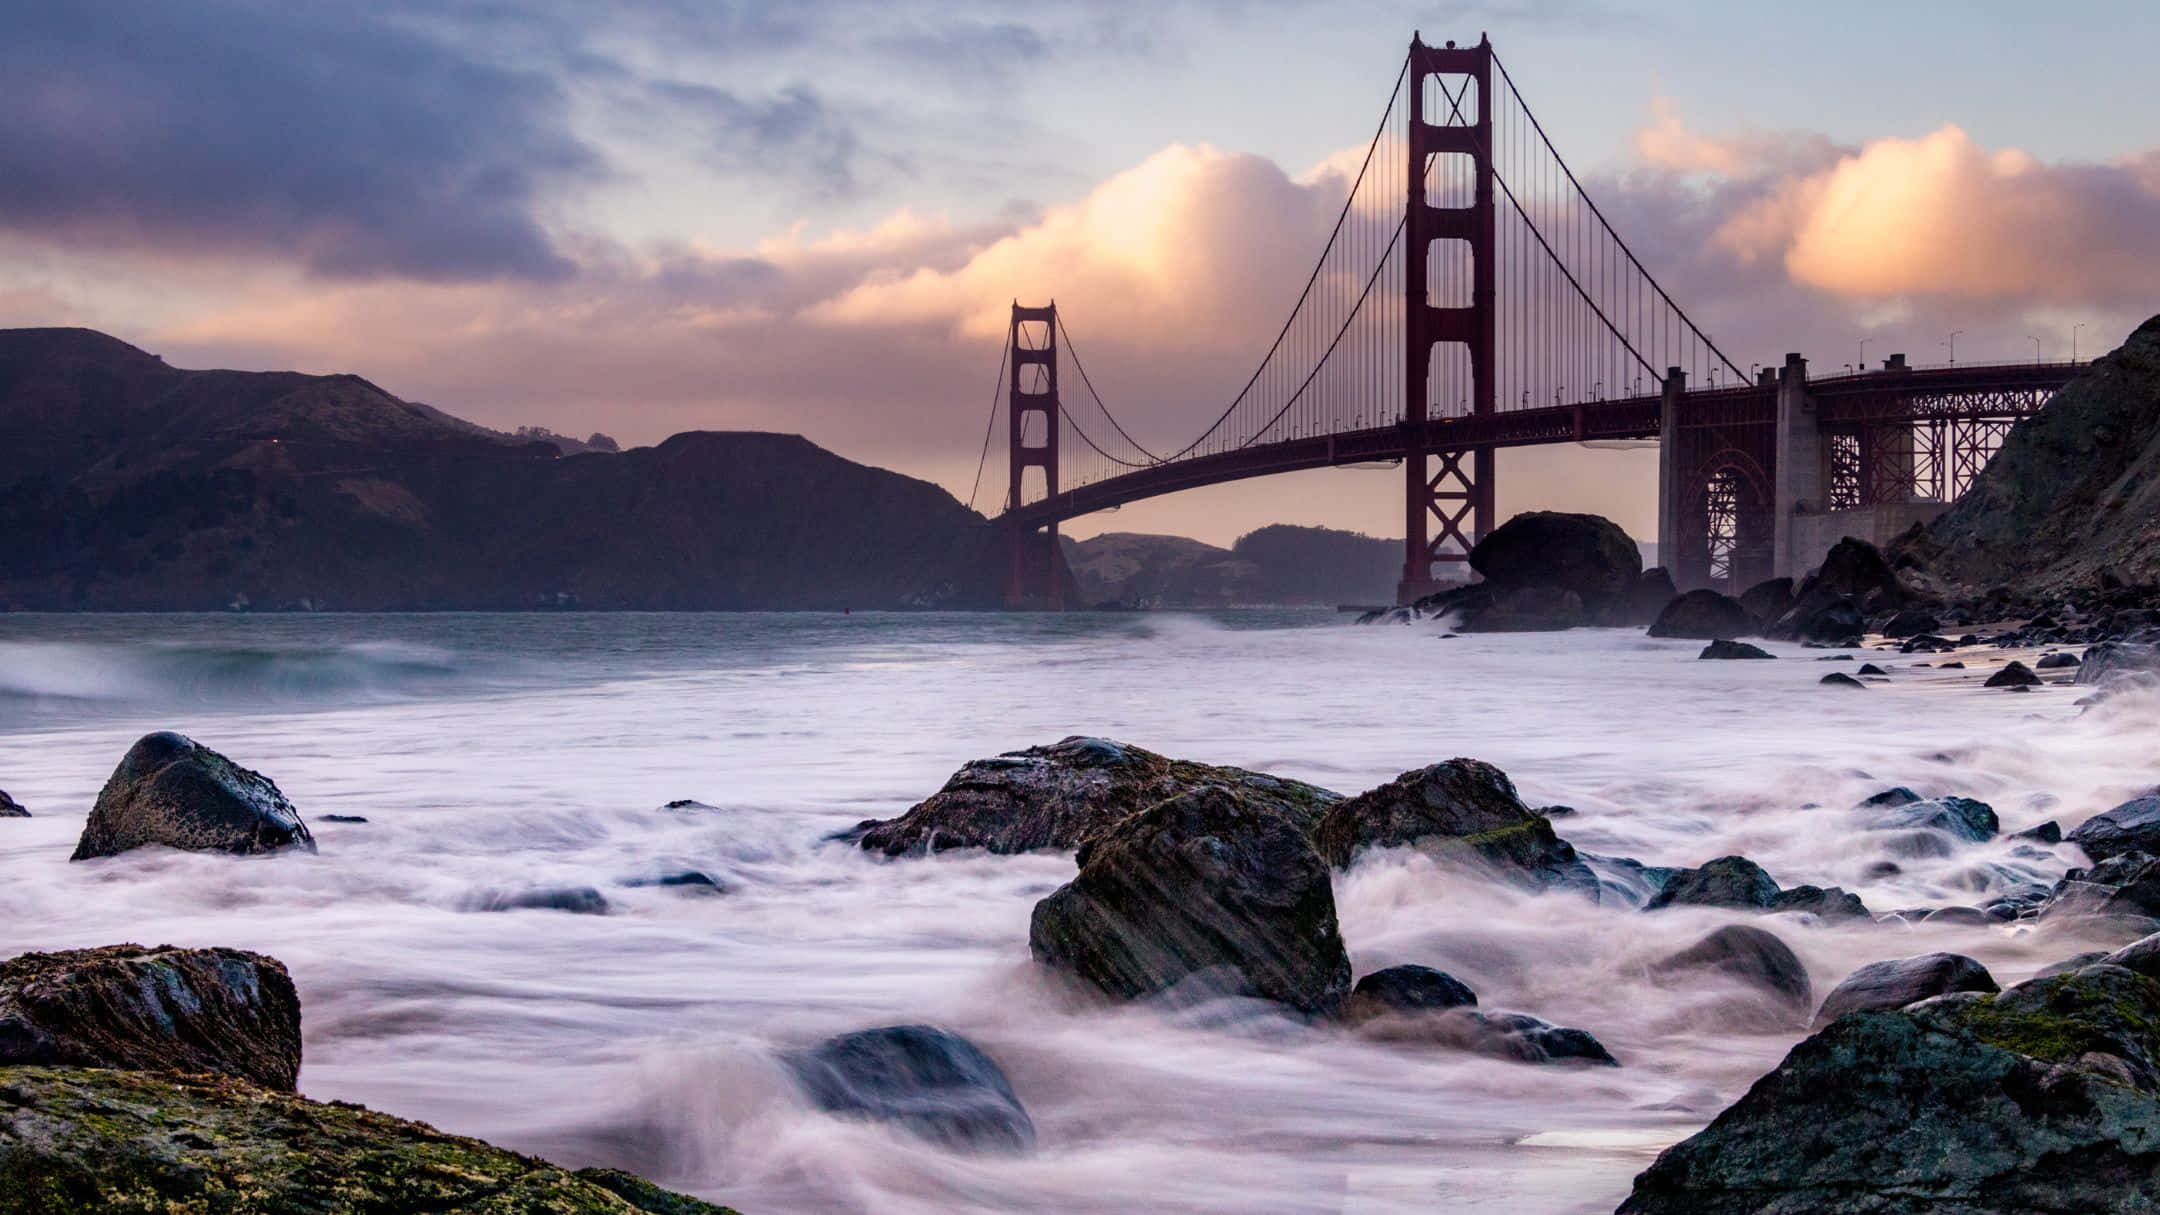 Capturing the beauty of San Francisco Bay